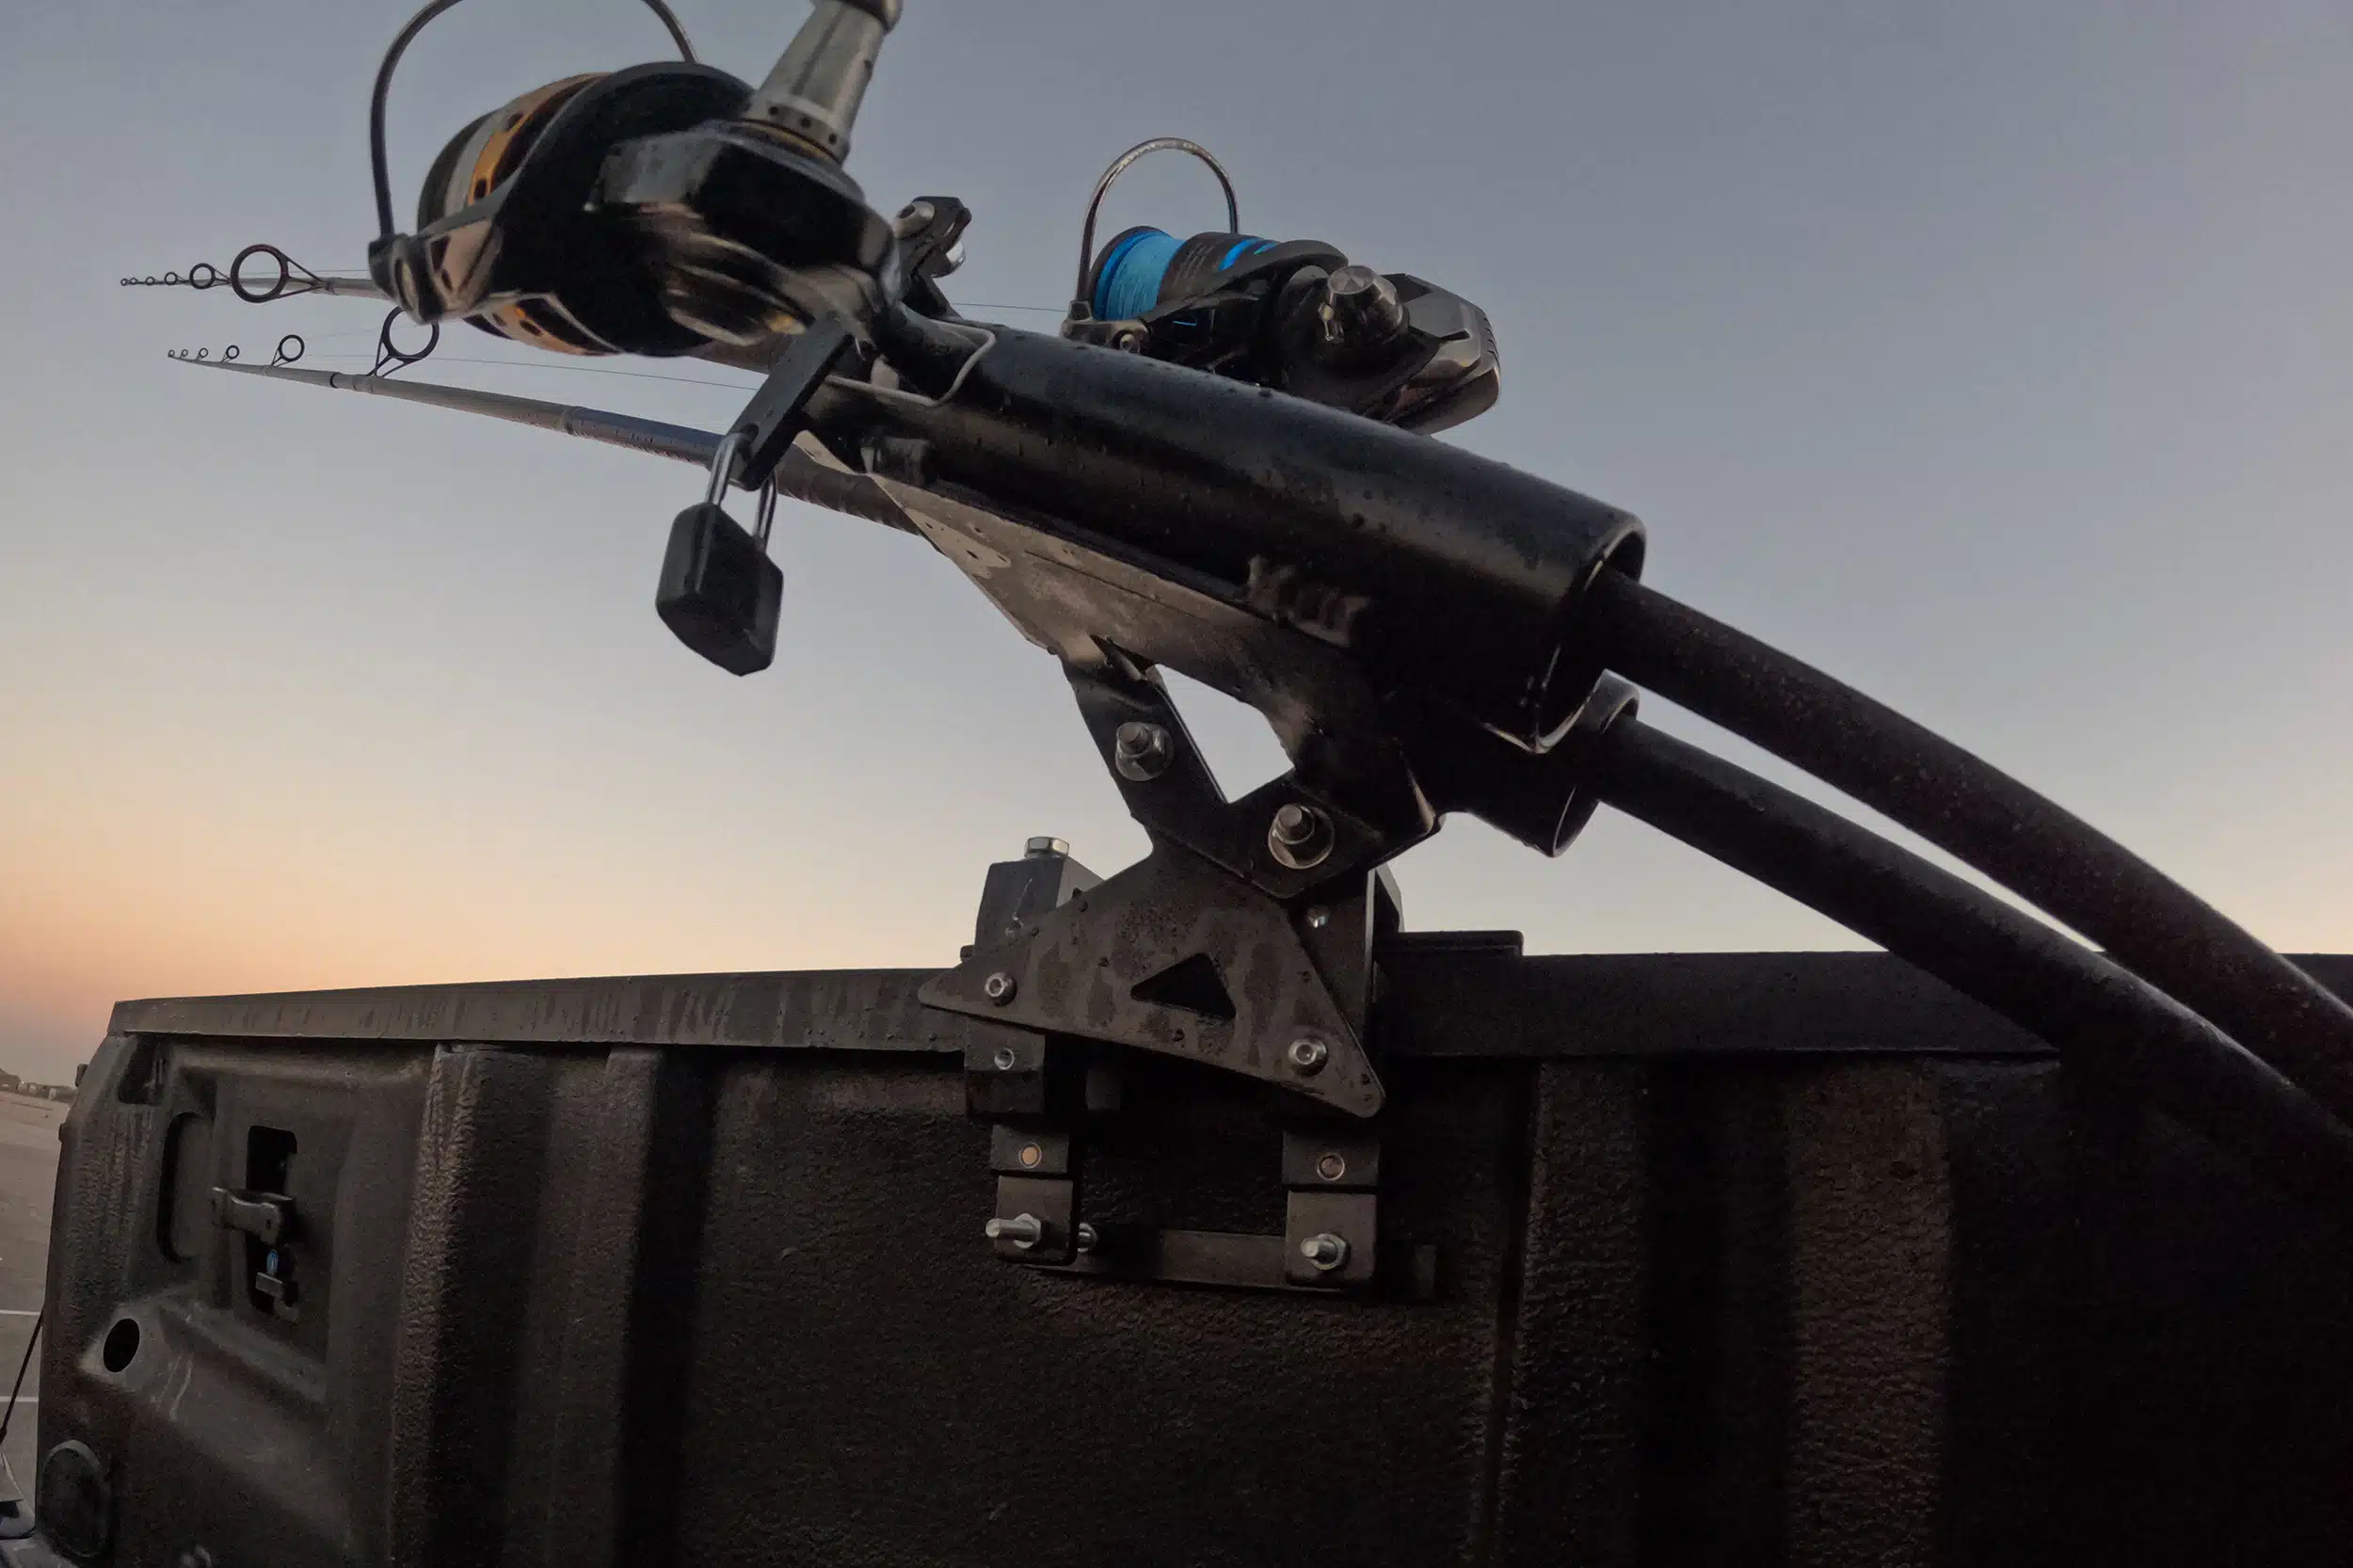 X-Rocket RTC Locking Roof Top Fishing Rod Holders - X-Rack